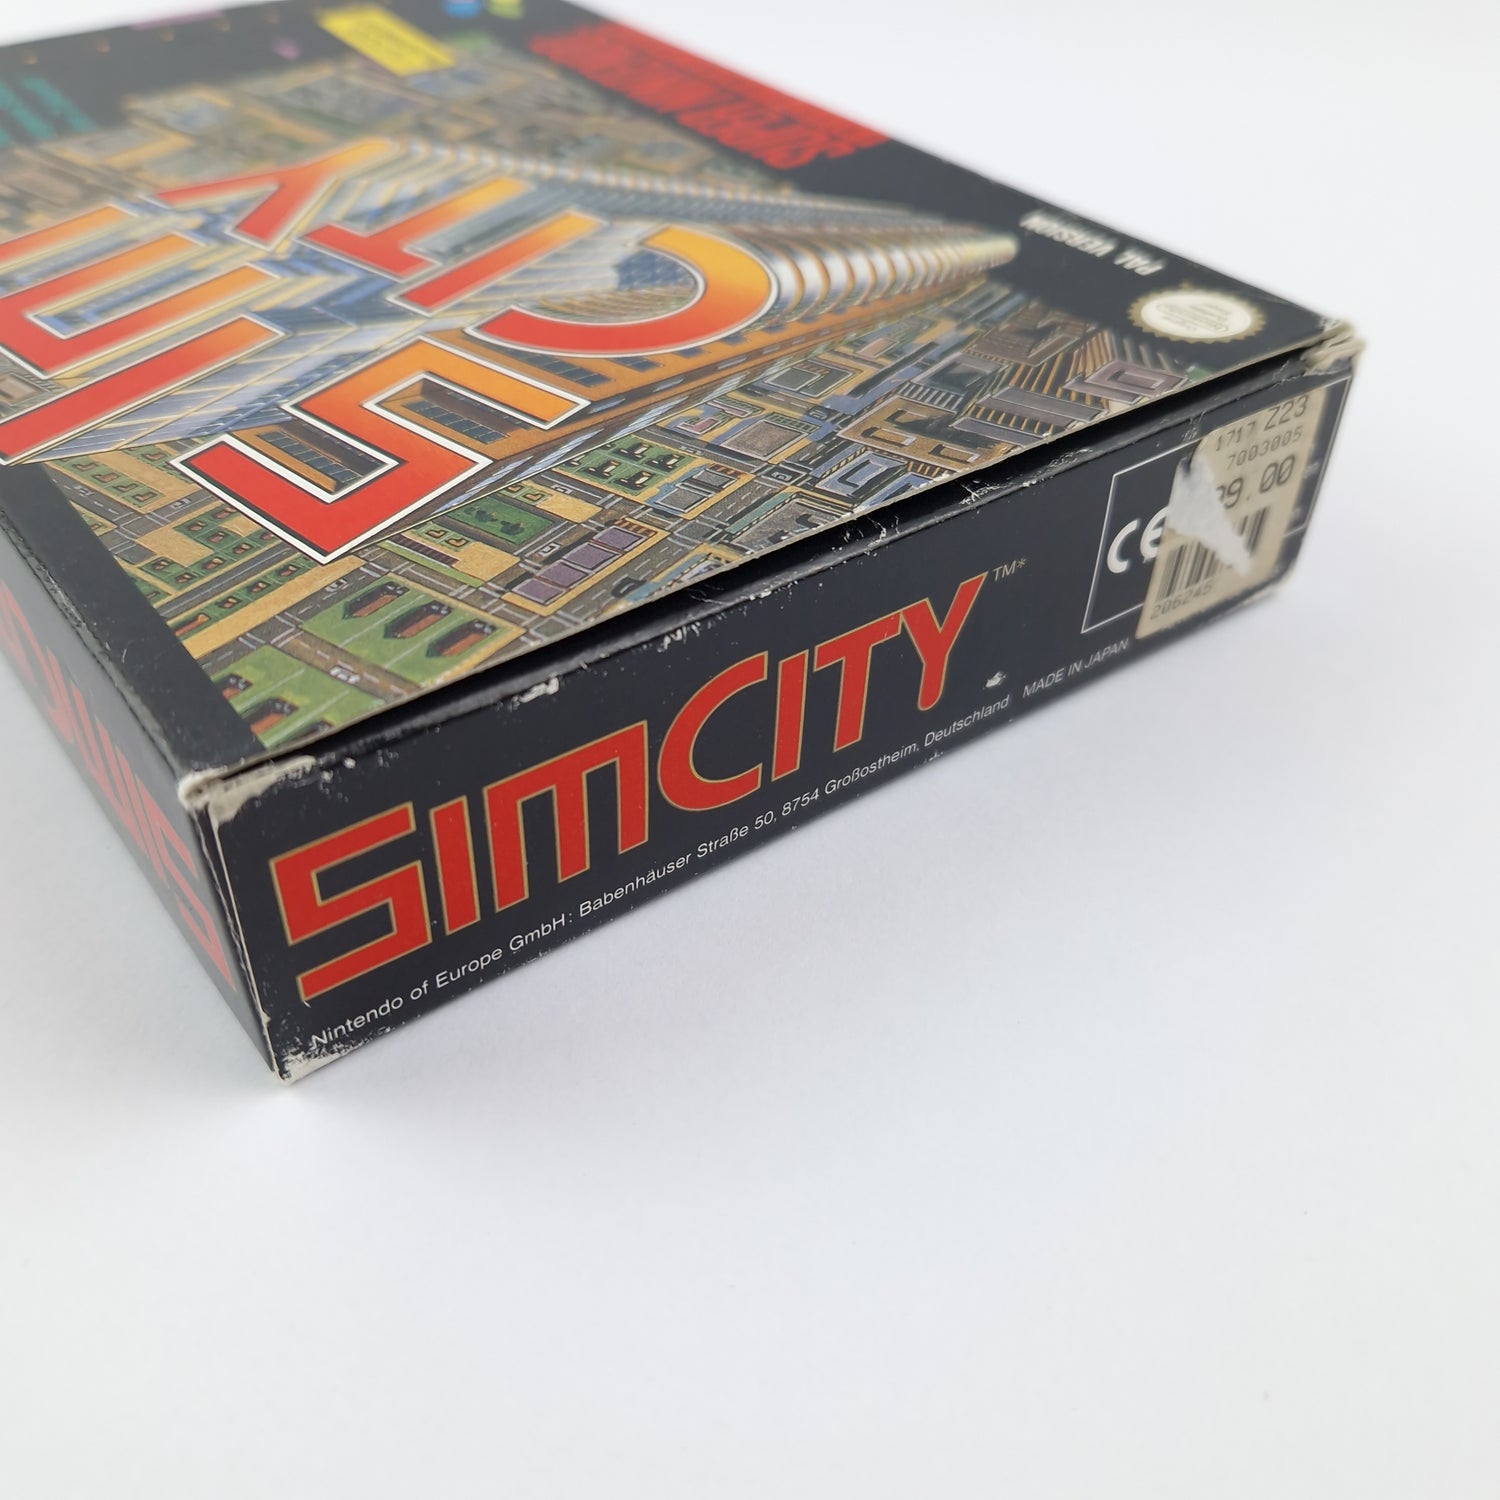 Super Nintendo Spiel : Sim City - OVP Anleitung Modul Cartridge | SNES PAL Game